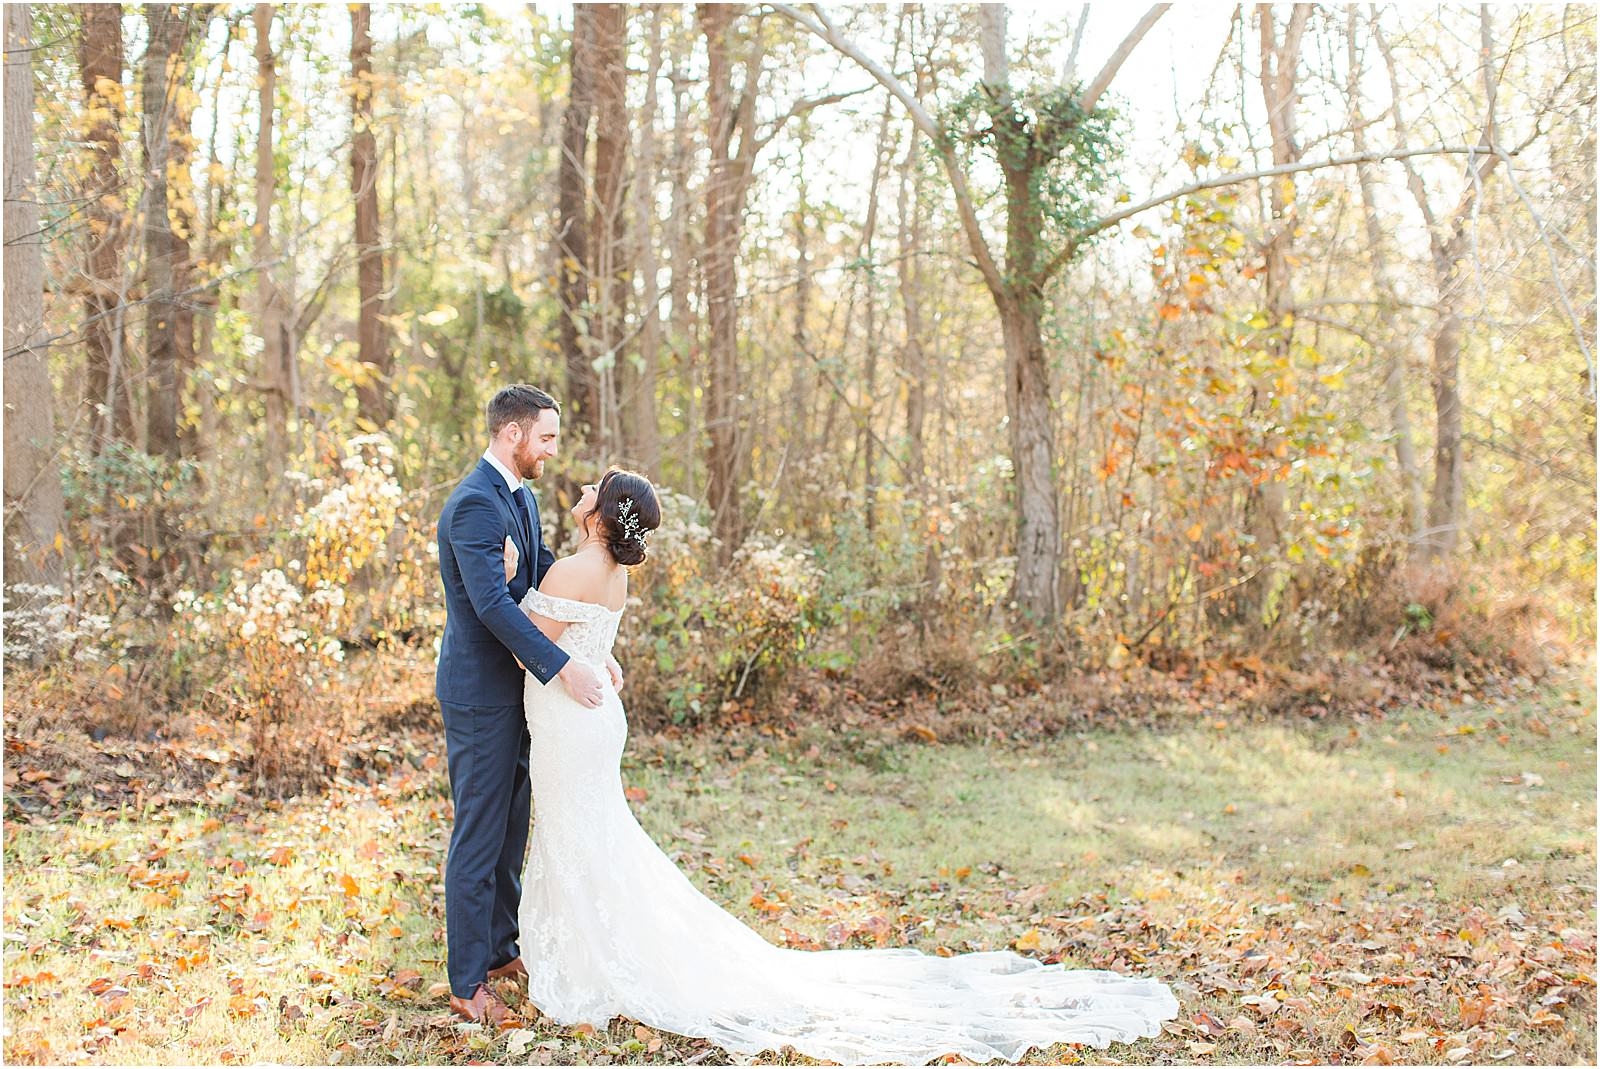 Walker and Alyssa's intimate fall wedding in Southern Indiana. | Wedding Photography | The Corner House Wedding | Southern Indiana Wedding | #fallwedding #intimatewedding | 026.jpg